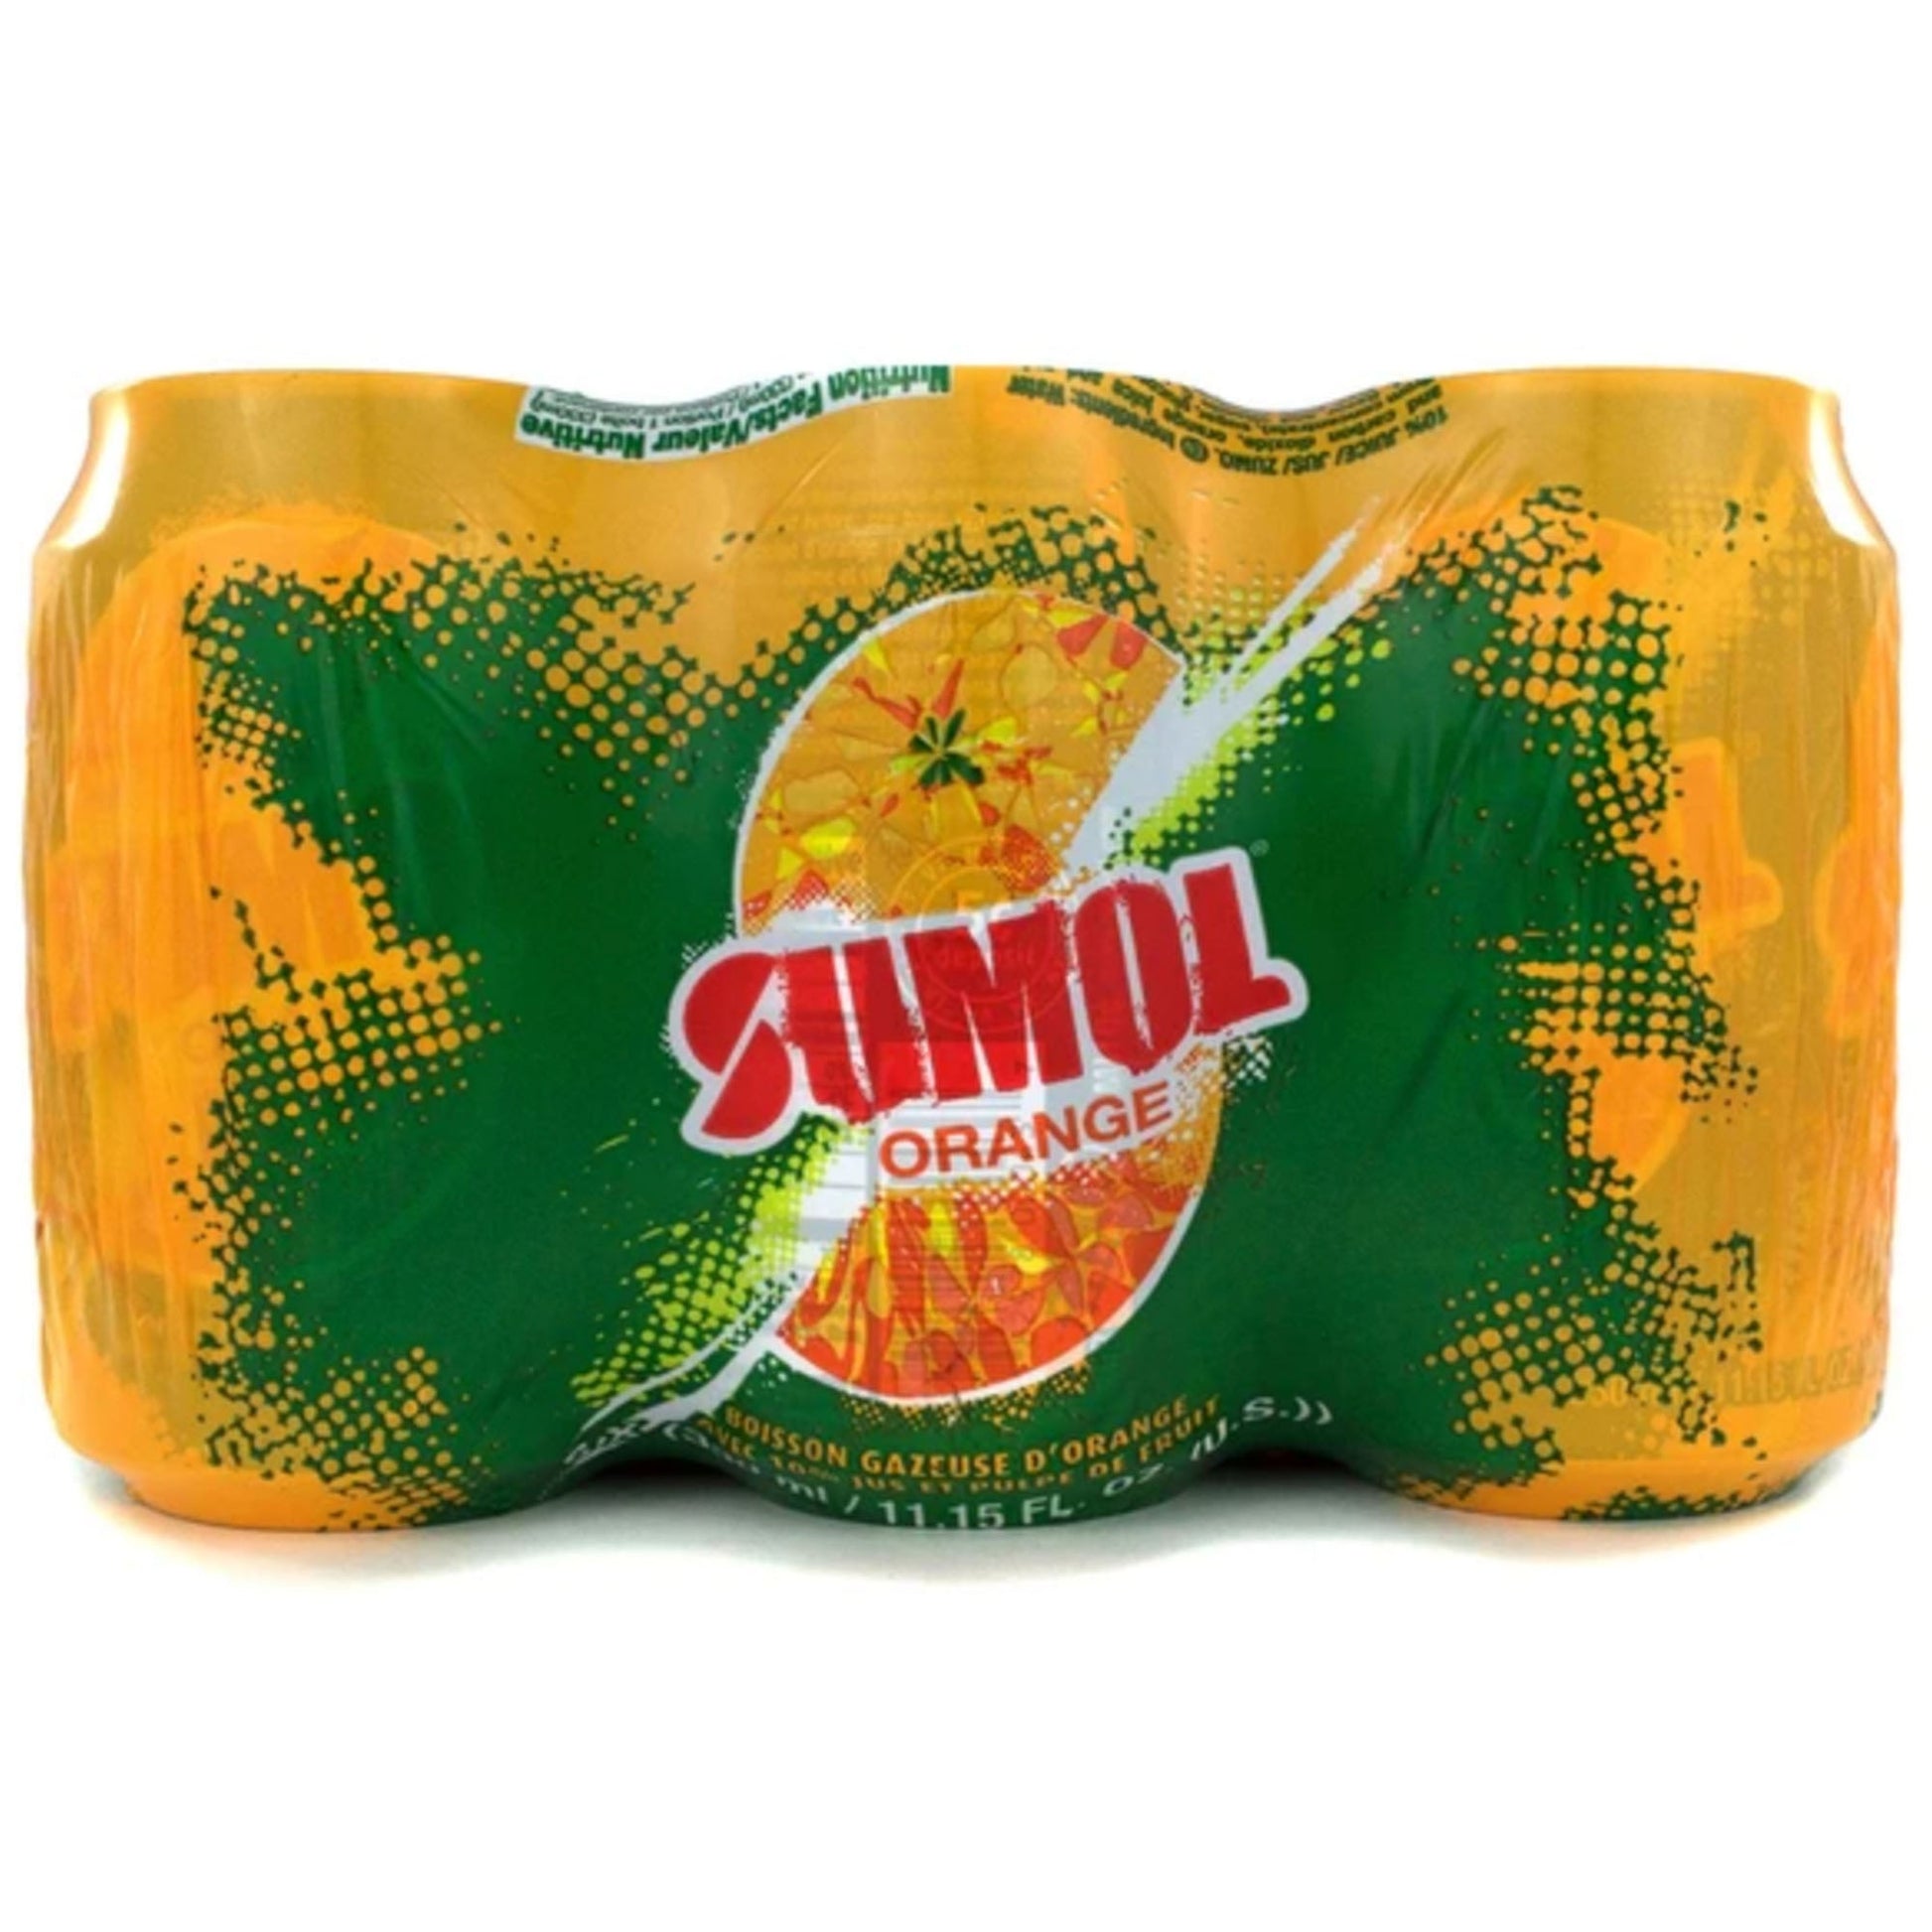 Sumol Orange 6X330Ml